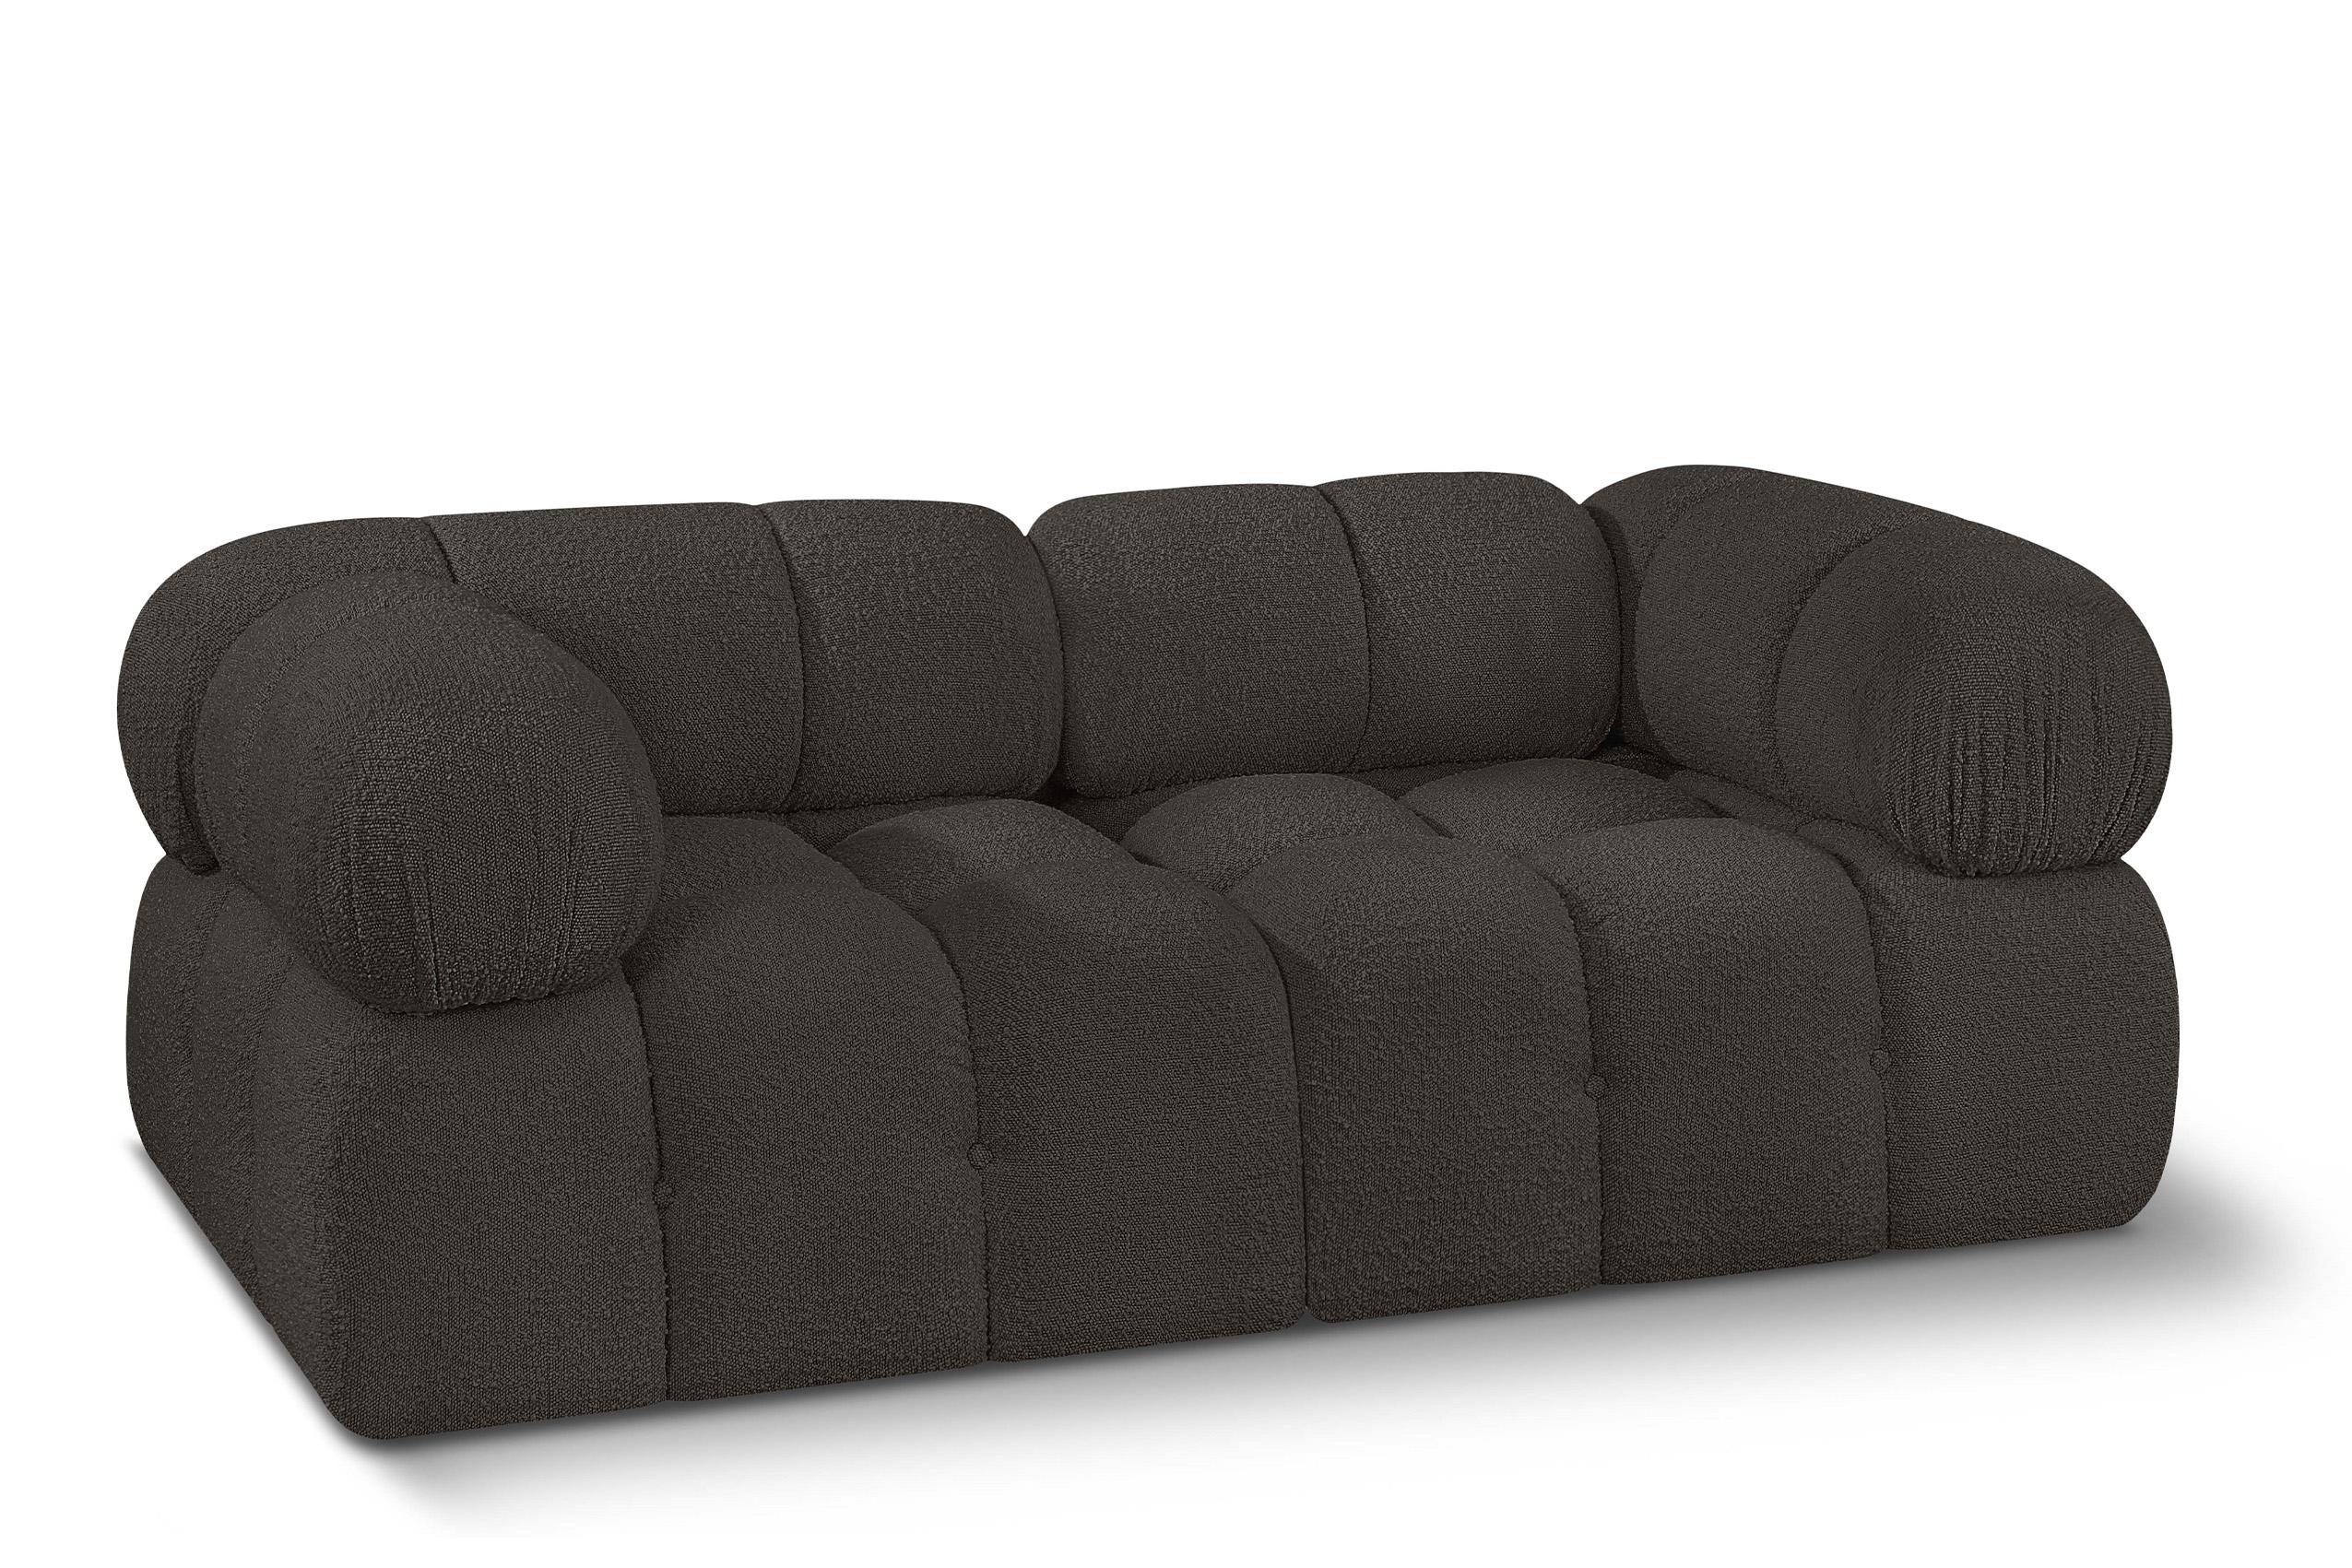 Contemporary, Modern Modular Sofa AMES 611Brown-S68A 611Brown-S68A in Brown 